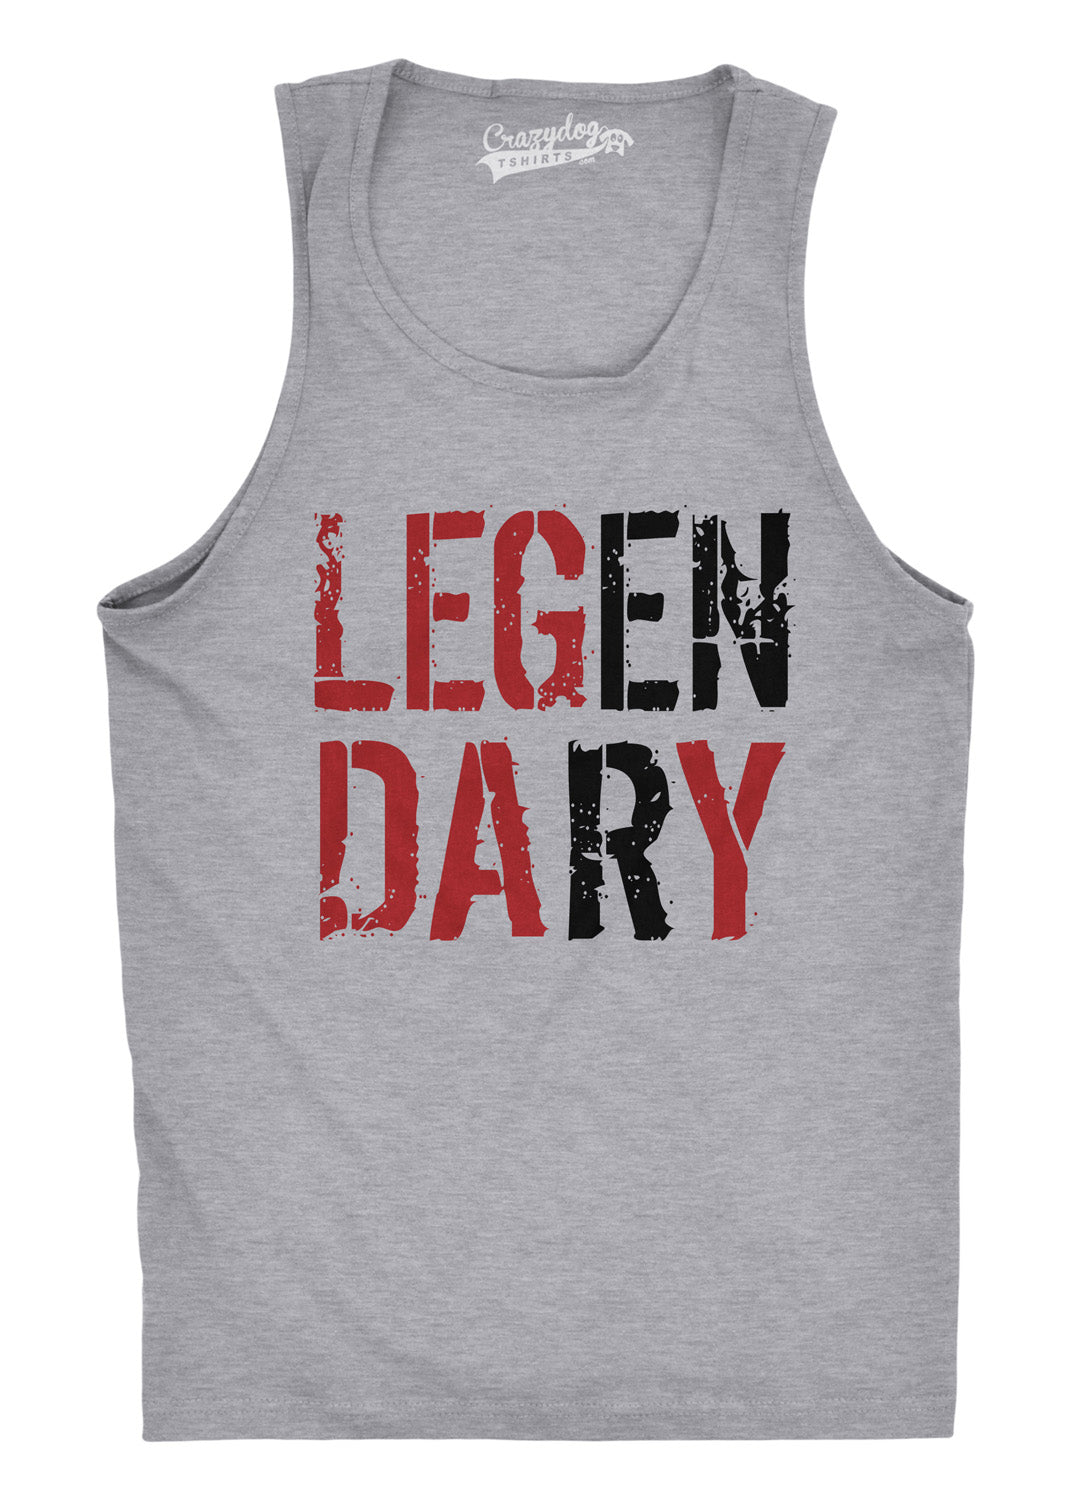 Funny Light Heather Grey Legendary Leg Day Mens Tank Top Nerdy Fitness Tee